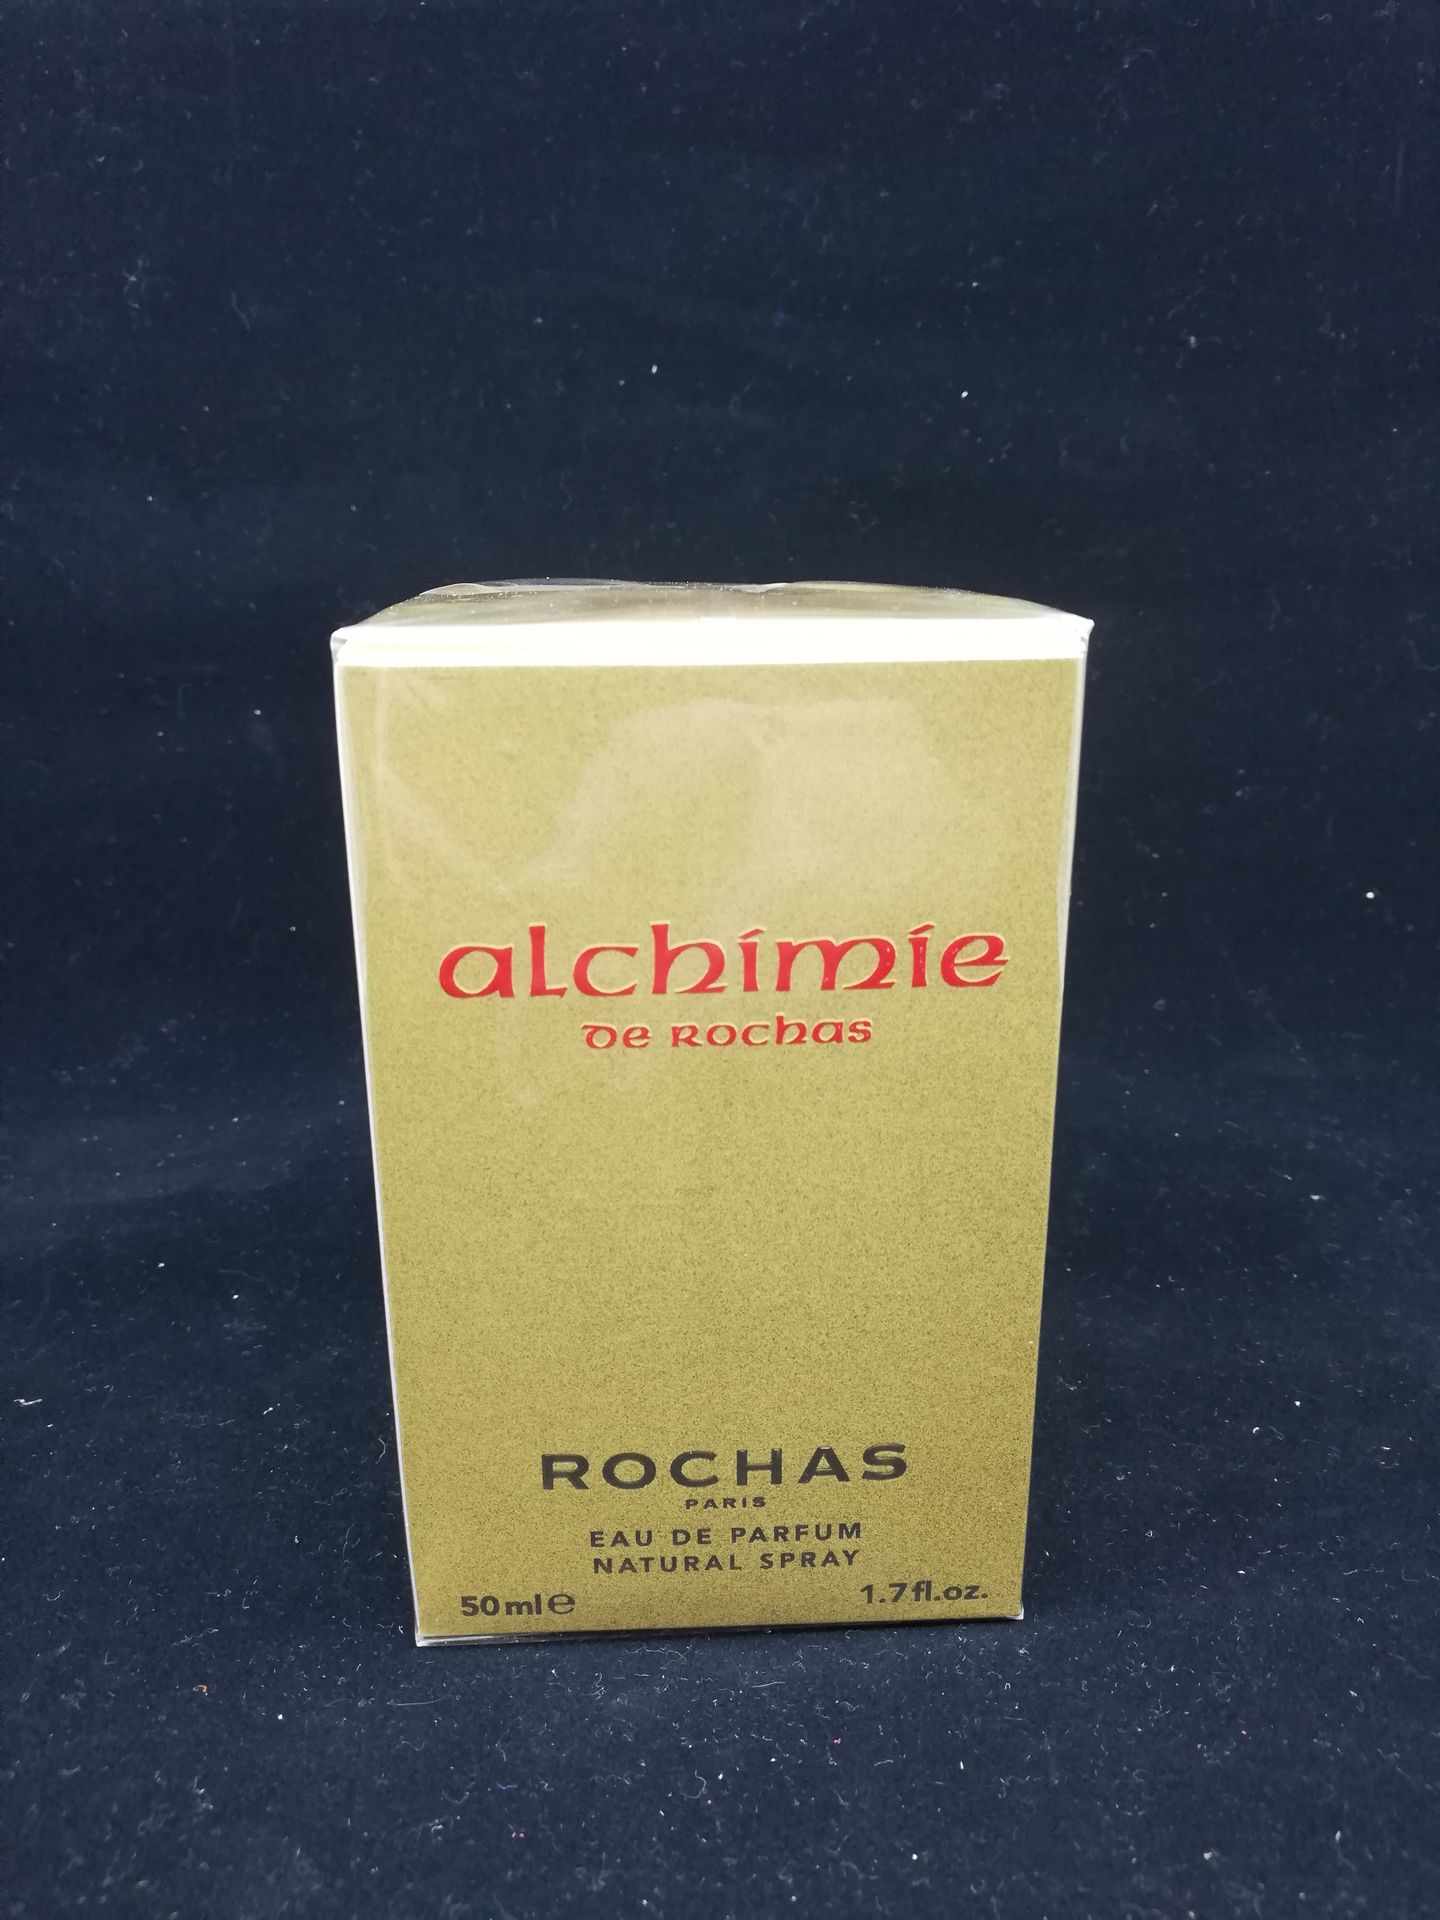 Null Rochas - "Alchimie" - (1998)

呈现在其以玻璃纤维为标题的纸板箱中，一个由Serge Mansau设计的喷雾瓶，含有50毫&hellip;